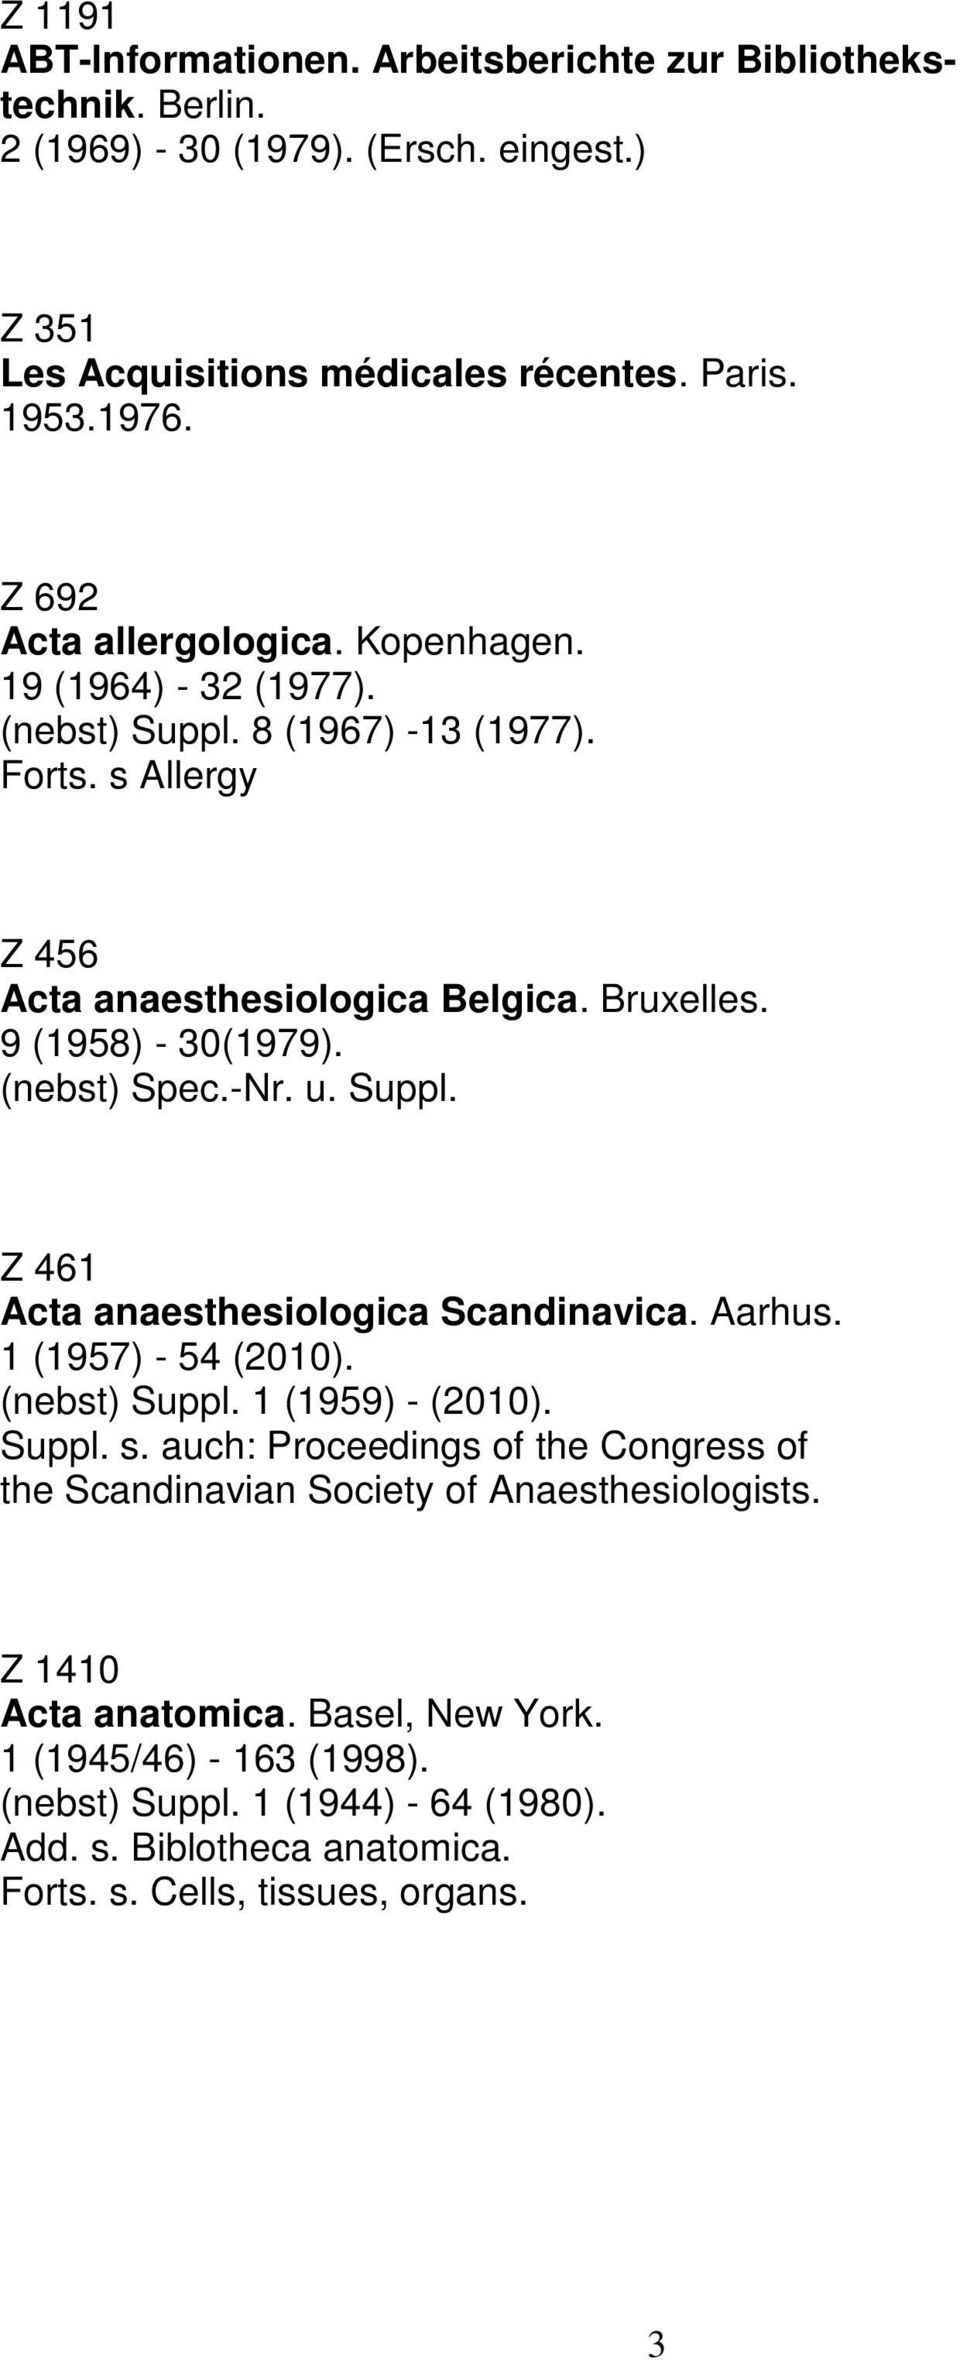 (nebst) Spec.-Nr. u. Suppl. Z 461 Acta anaesthesiologica Scandinavica. Aarhus. 1 (1957) - 54 (2010). 1 (1959) - (2010). Suppl. s.